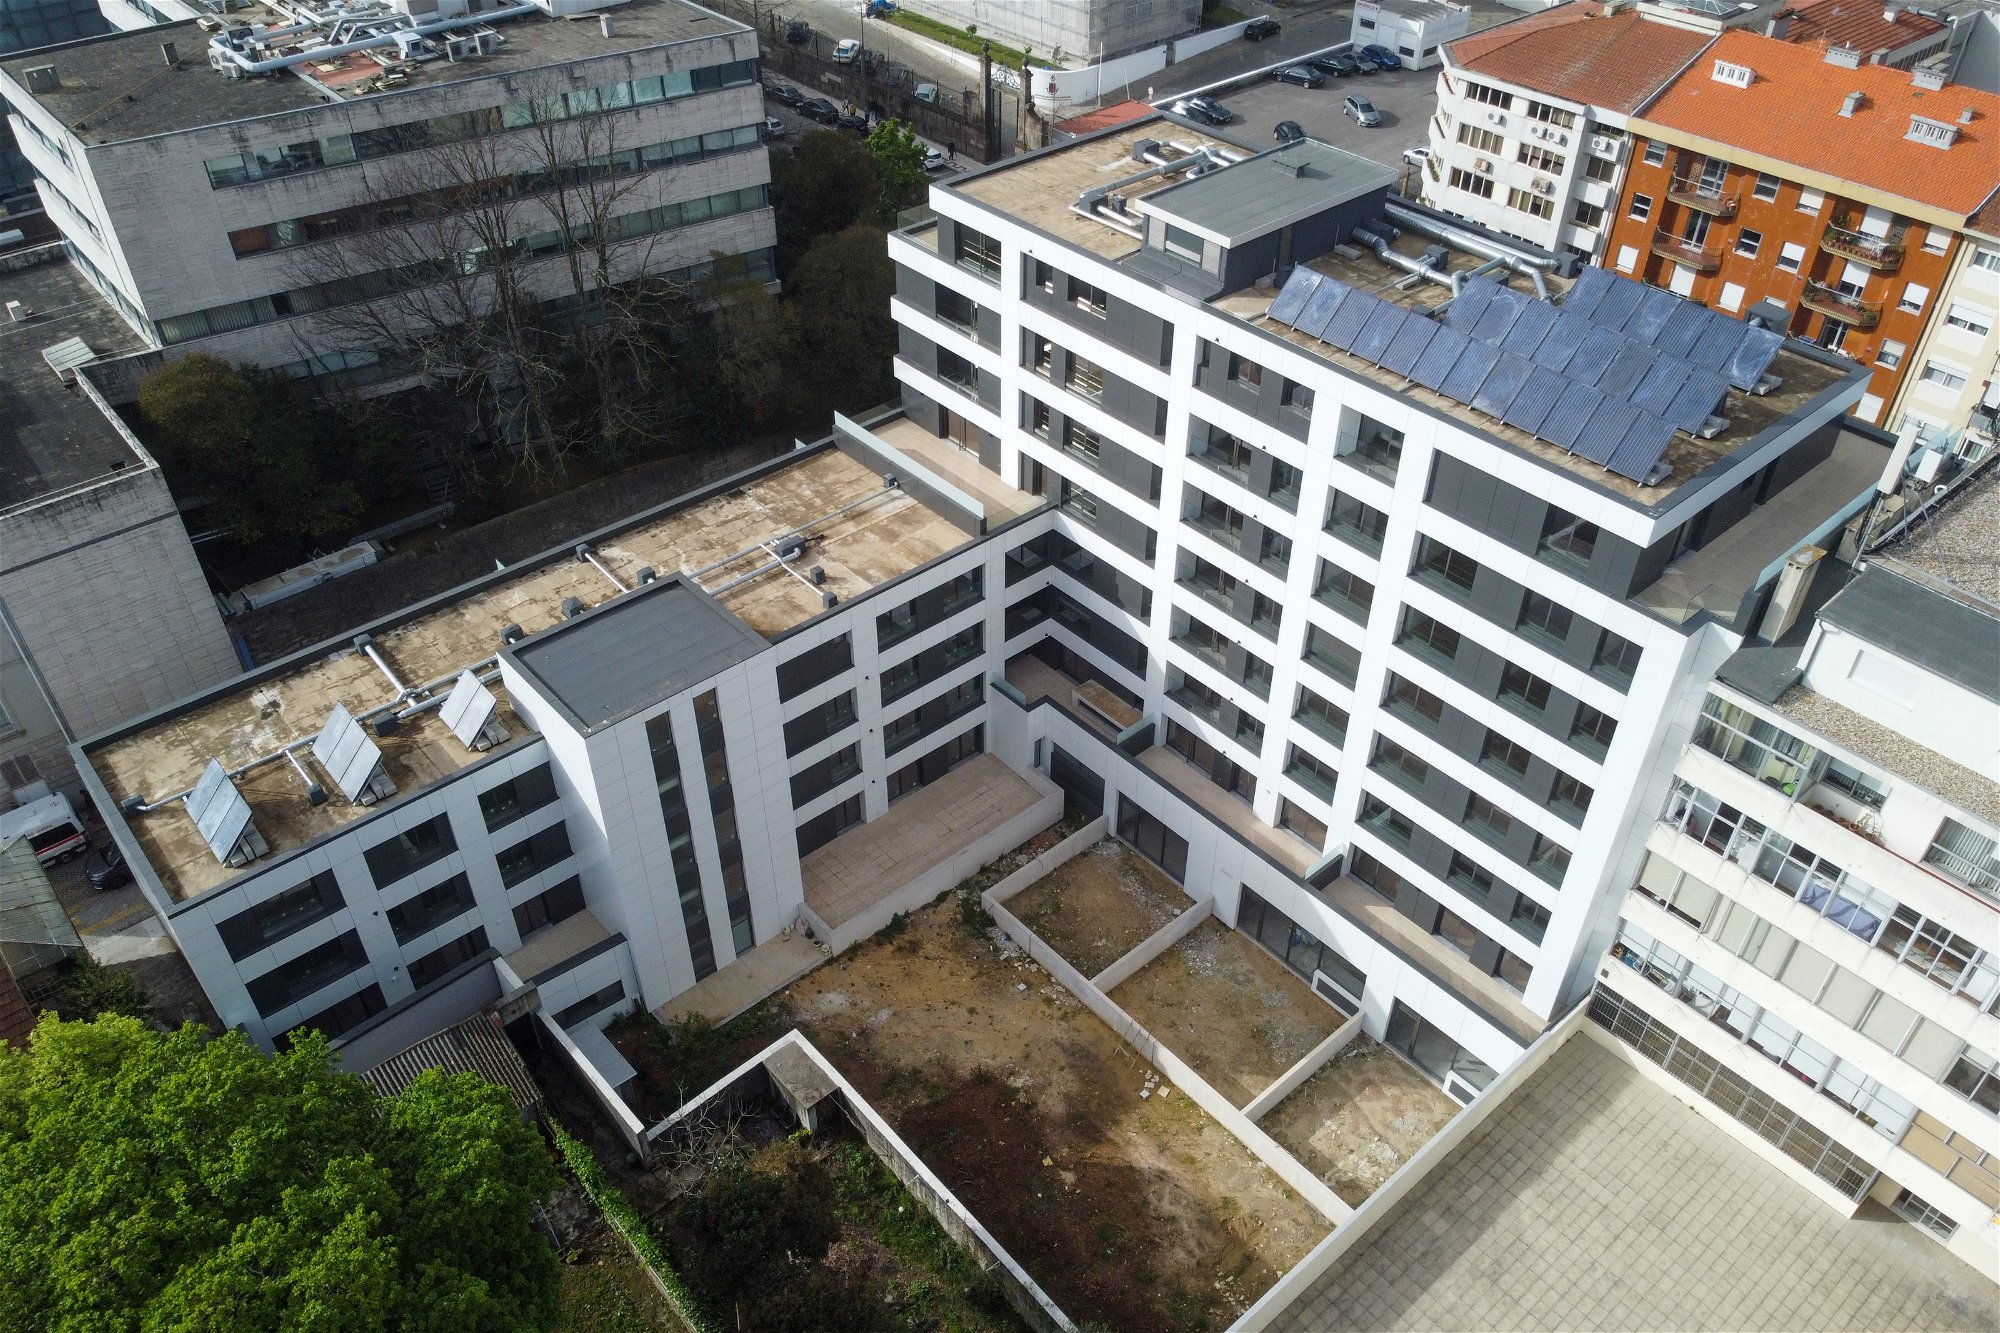 3 bedrooms apartment with balcony in Boavista, Porto 3478246663